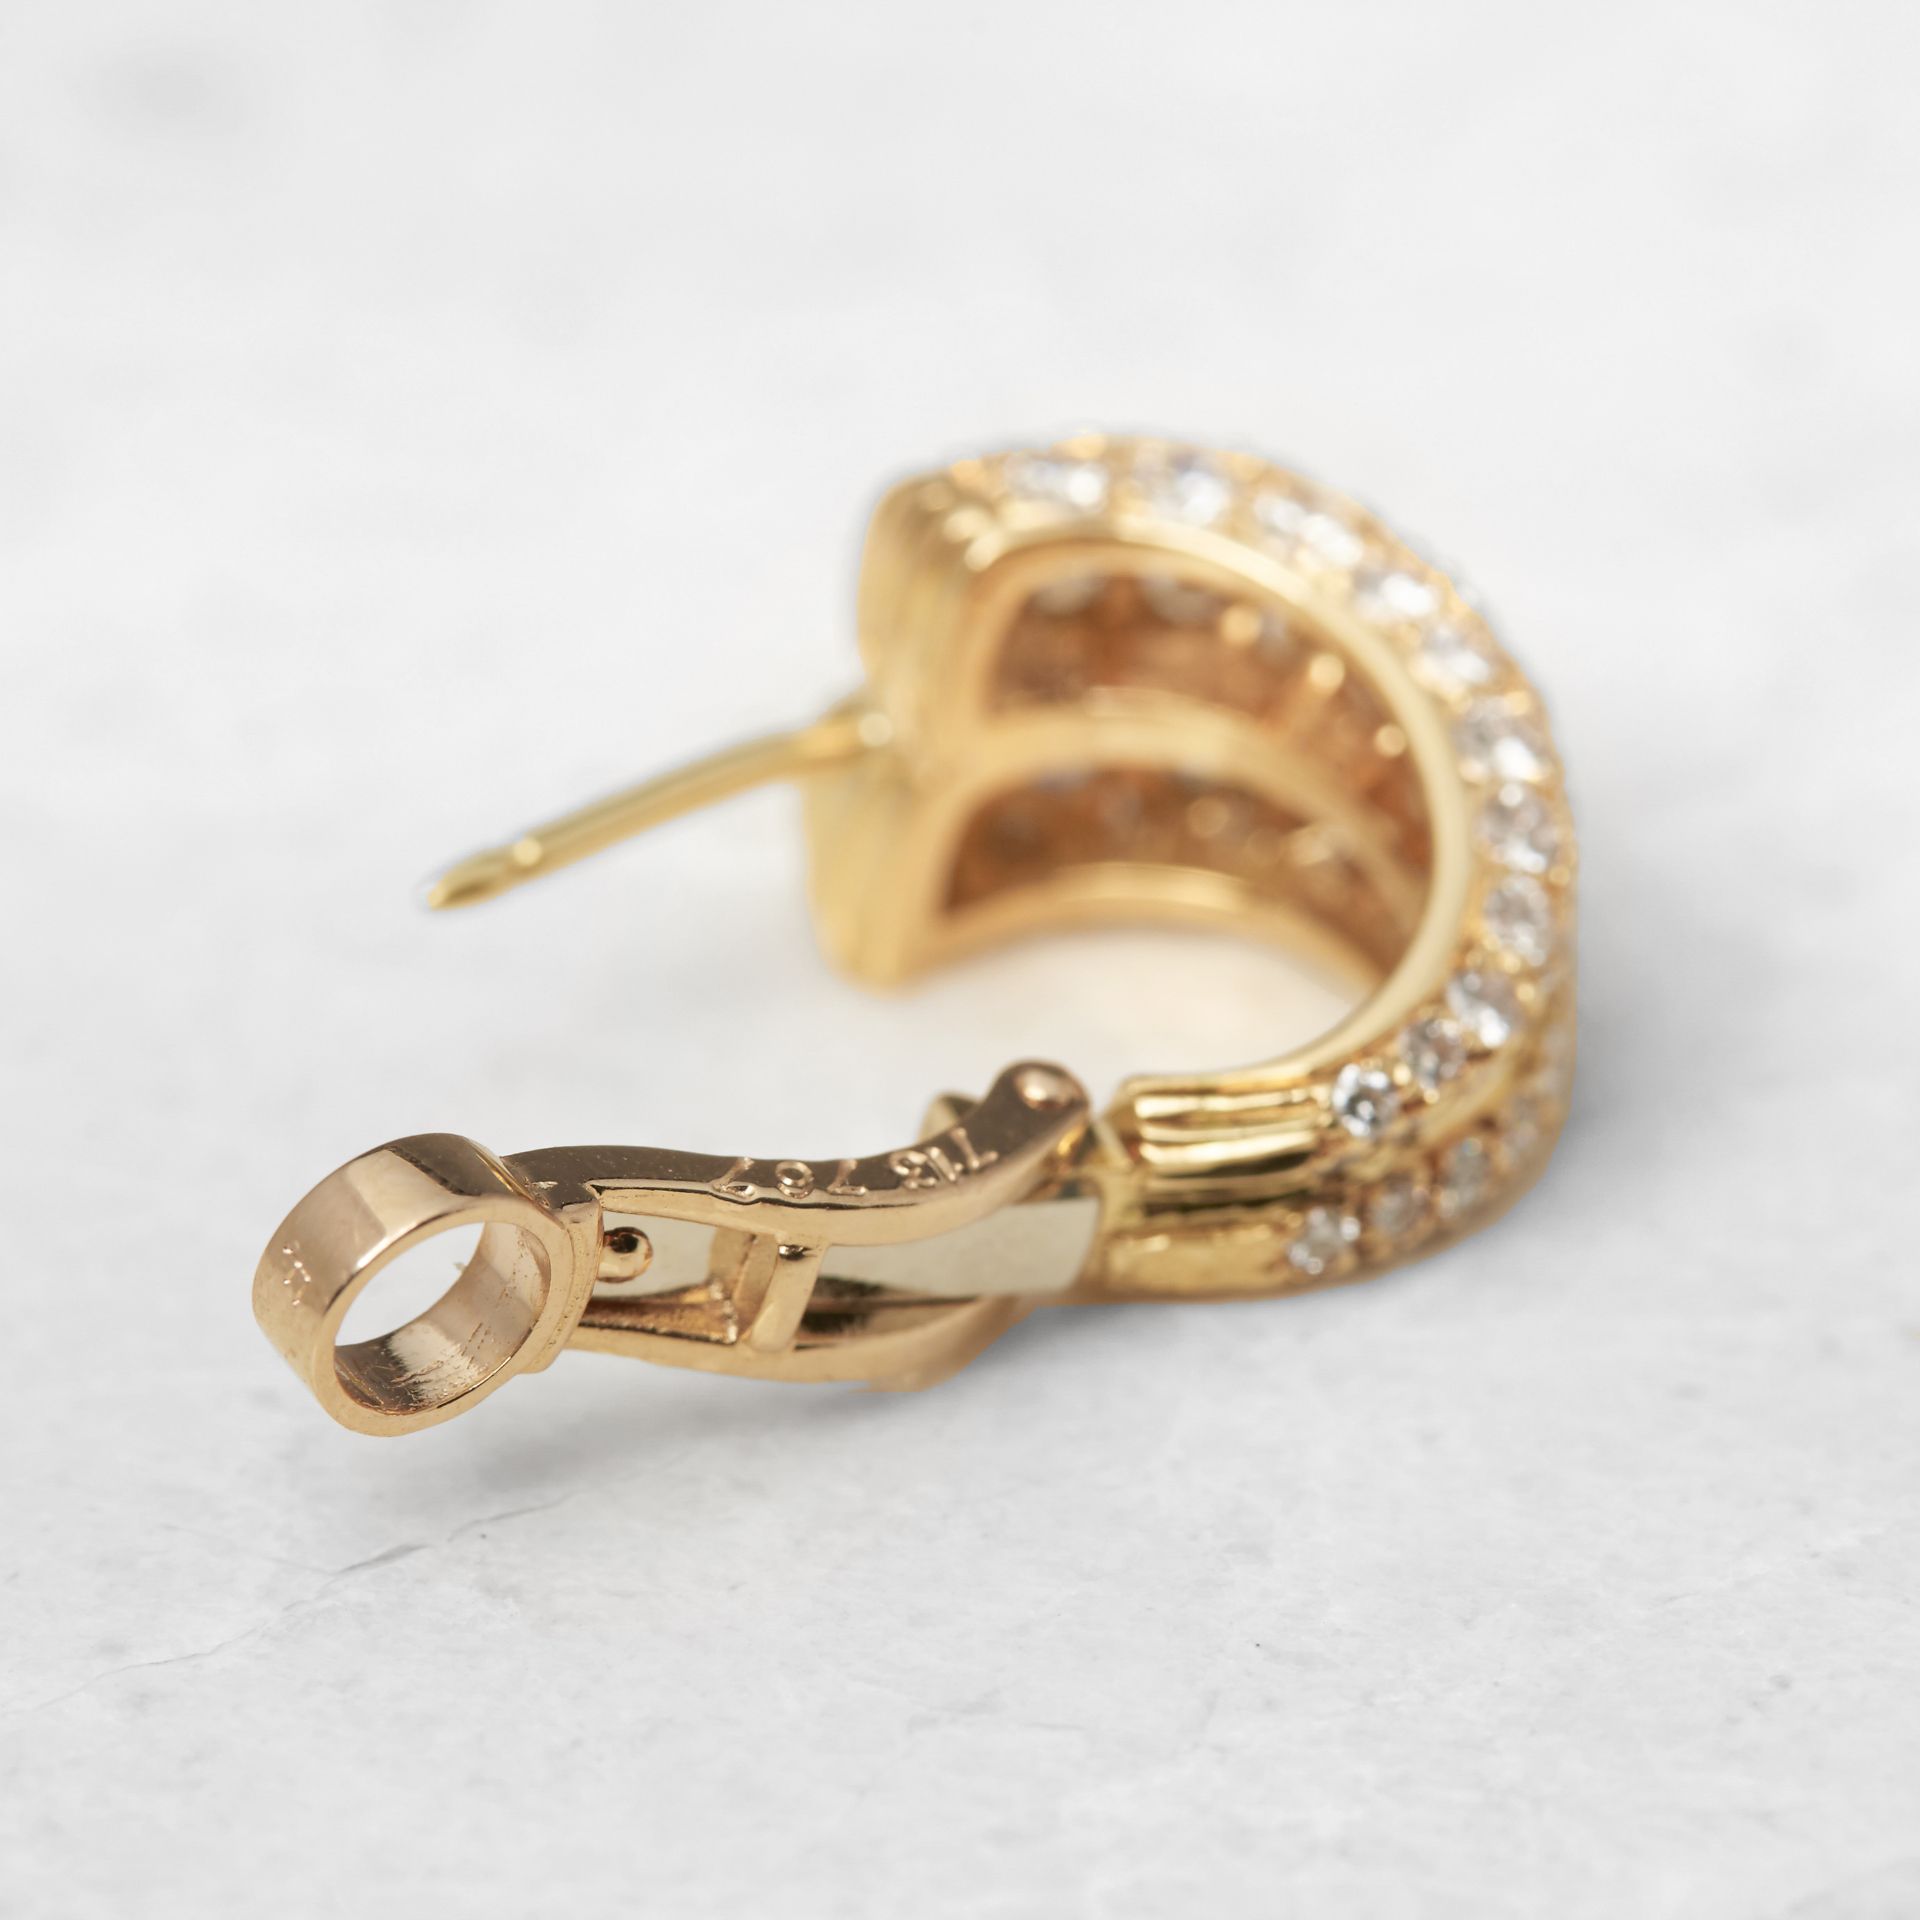 Cartier 18k Yellow Gold Diamond Double Hoop Earrings - Image 11 of 22